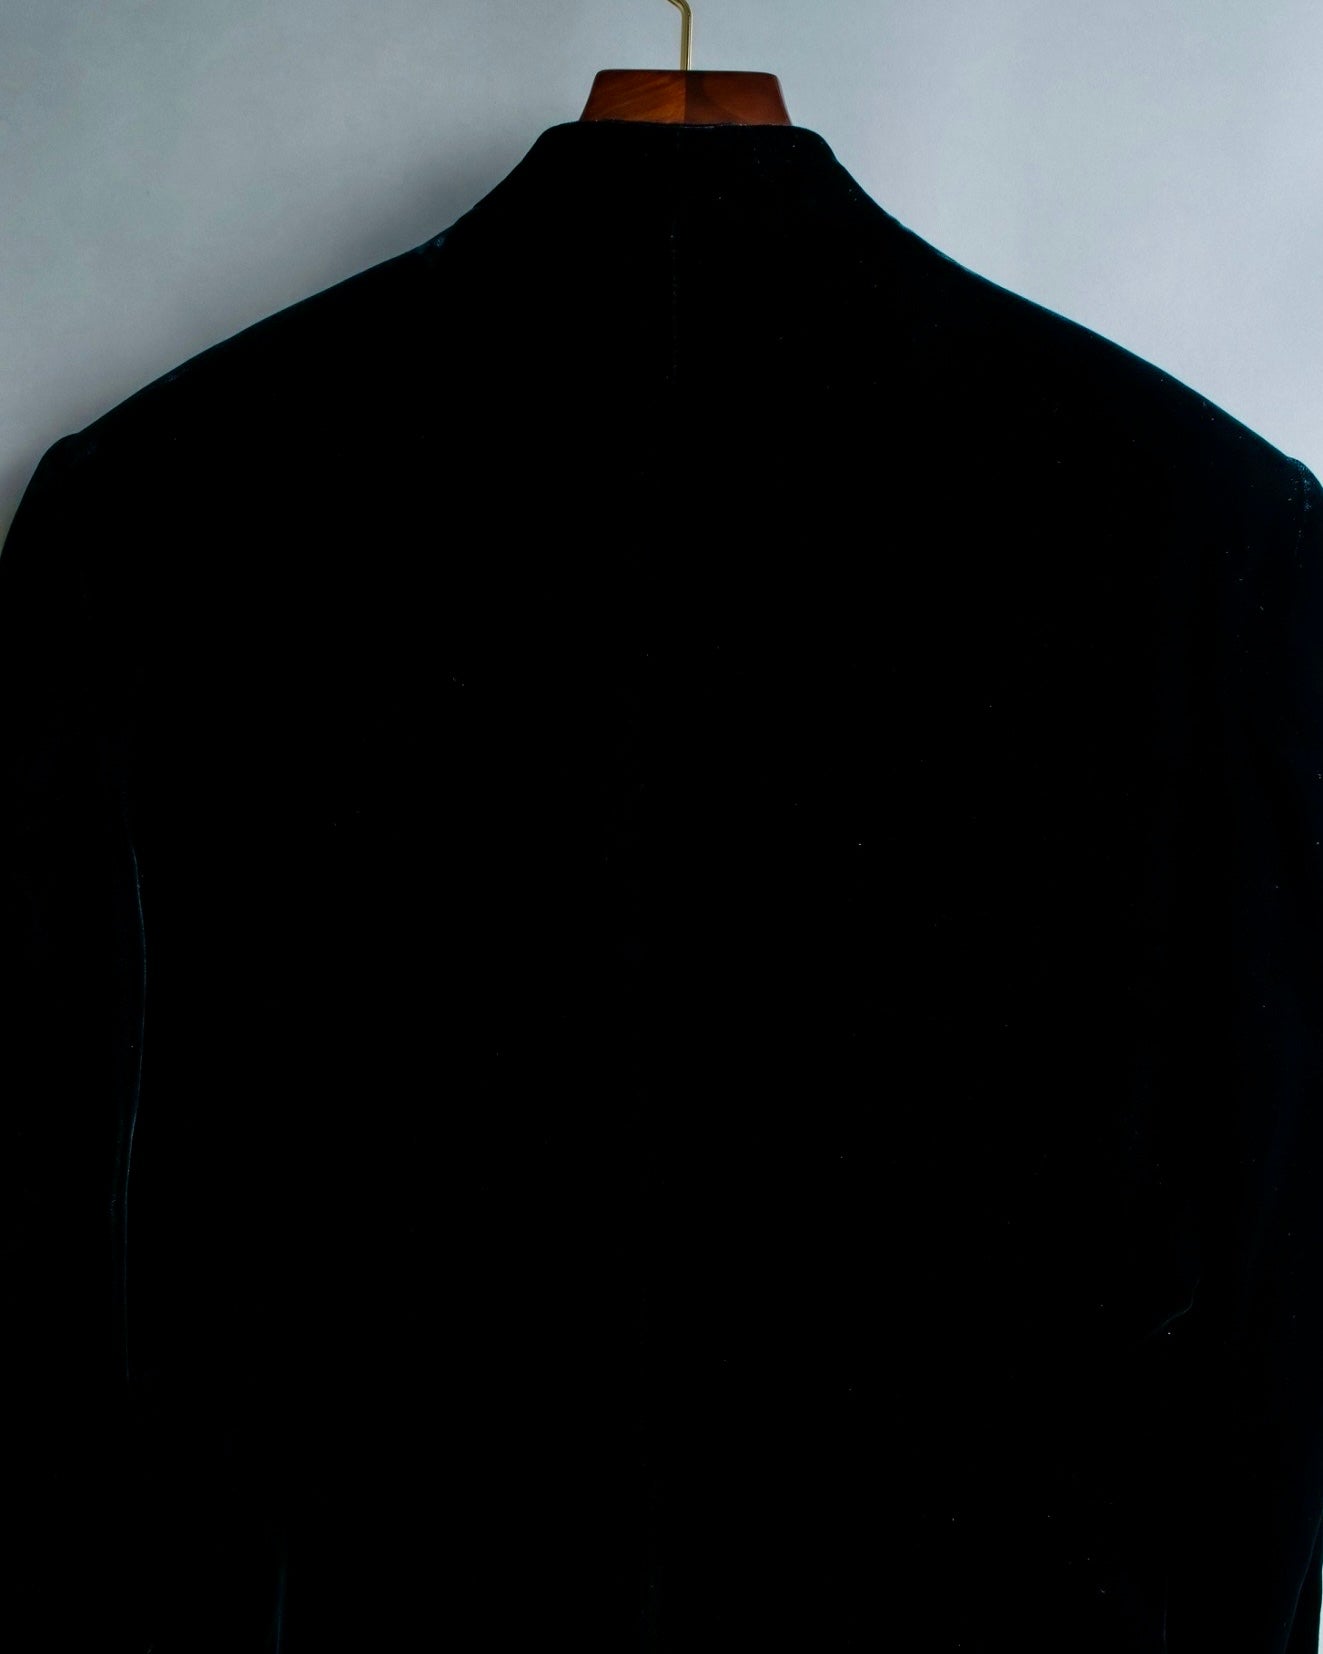 Collarless Beautiful Silhouette Velor Tailored Jacket